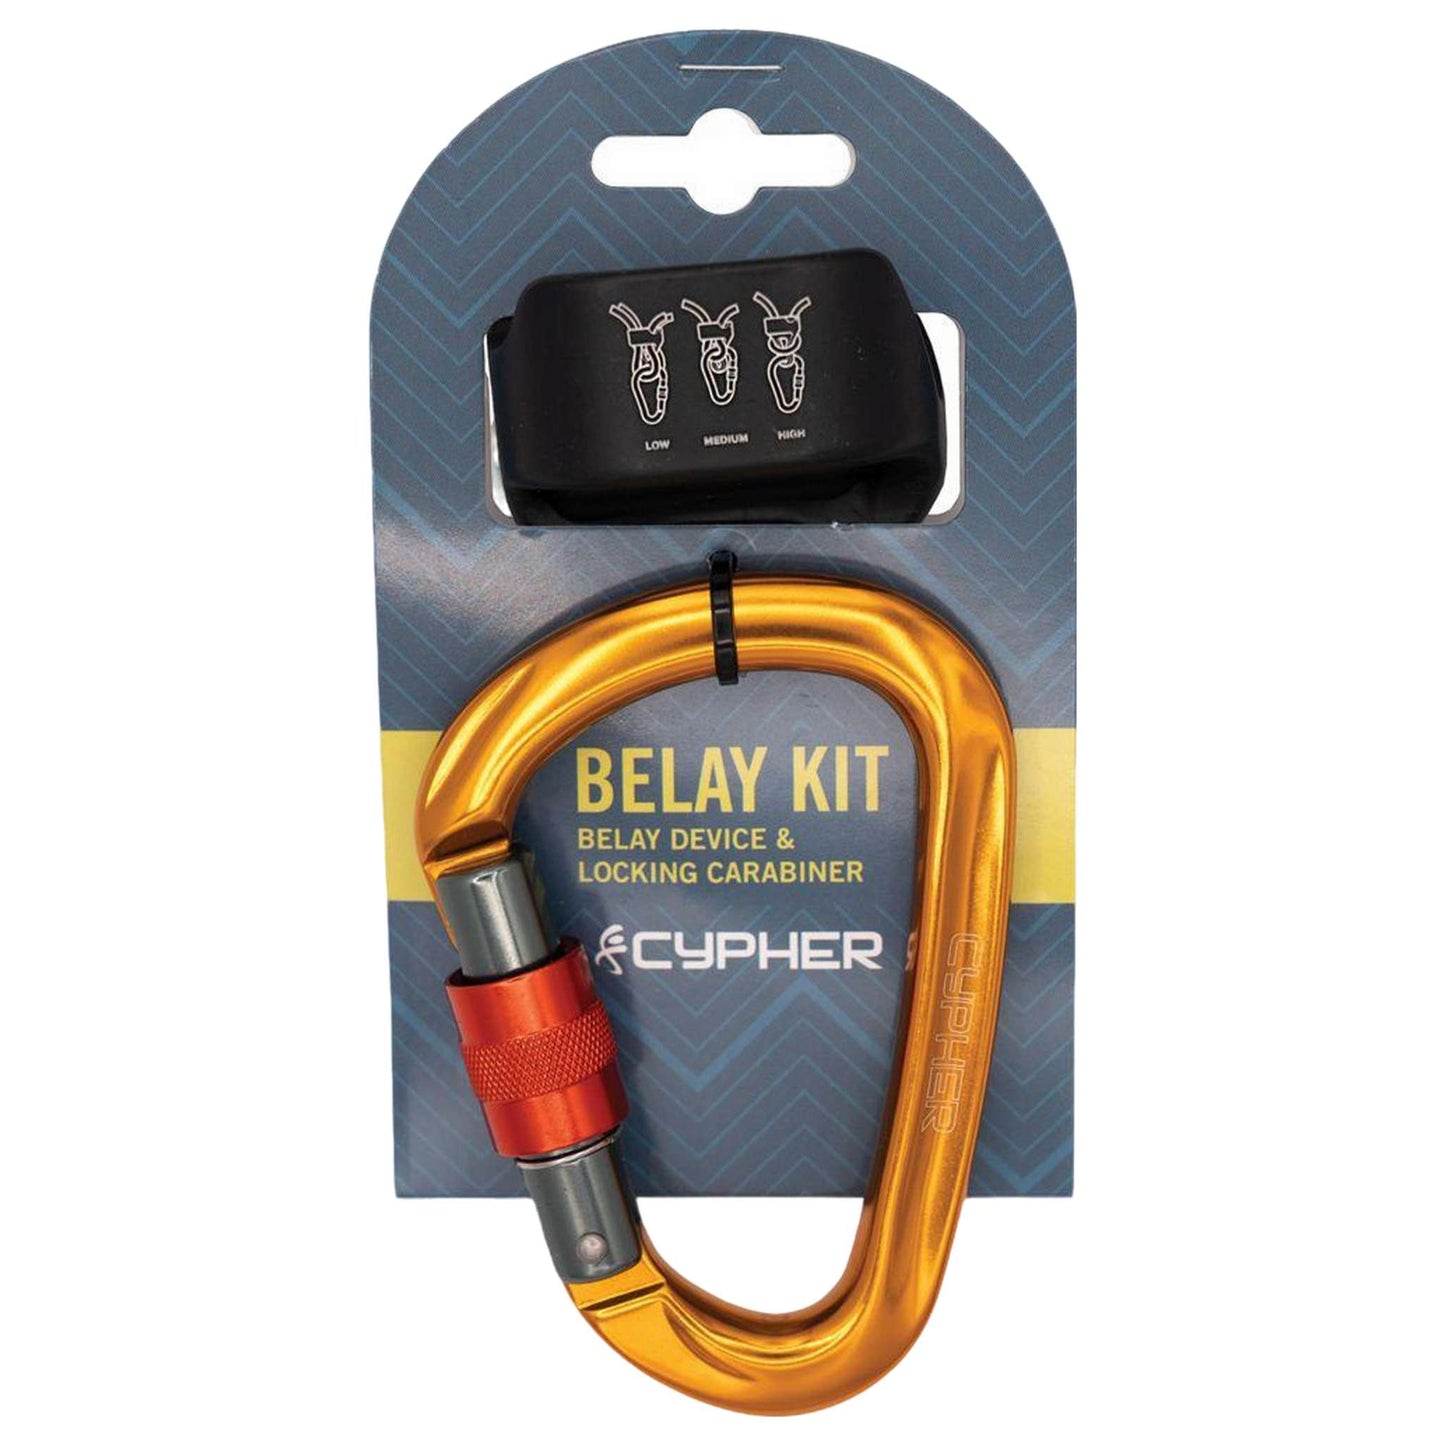 Cypher XF FORGE Belay Kit - Premium Locking Carabiner & Belay Device Combo